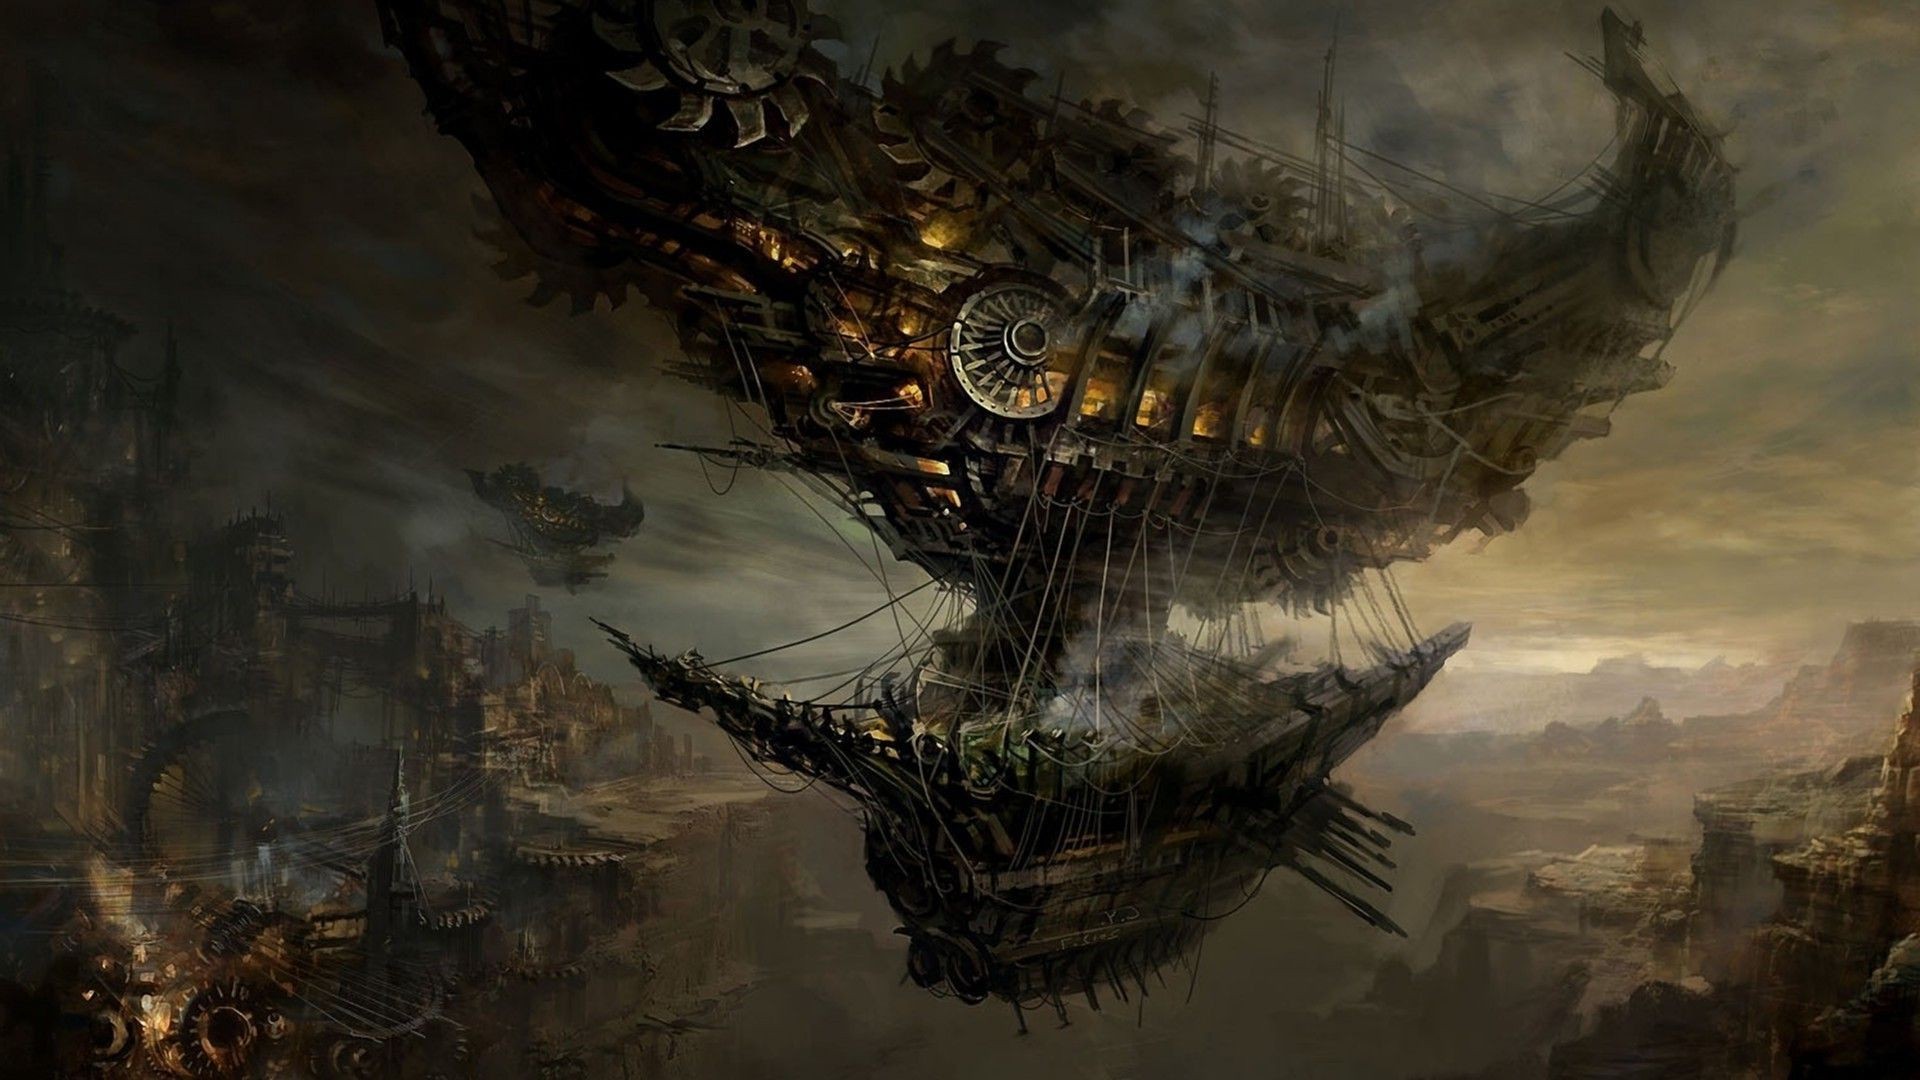 General 1920x1080 fantasy art dark fantasy artwork airships fantasy city vehicle